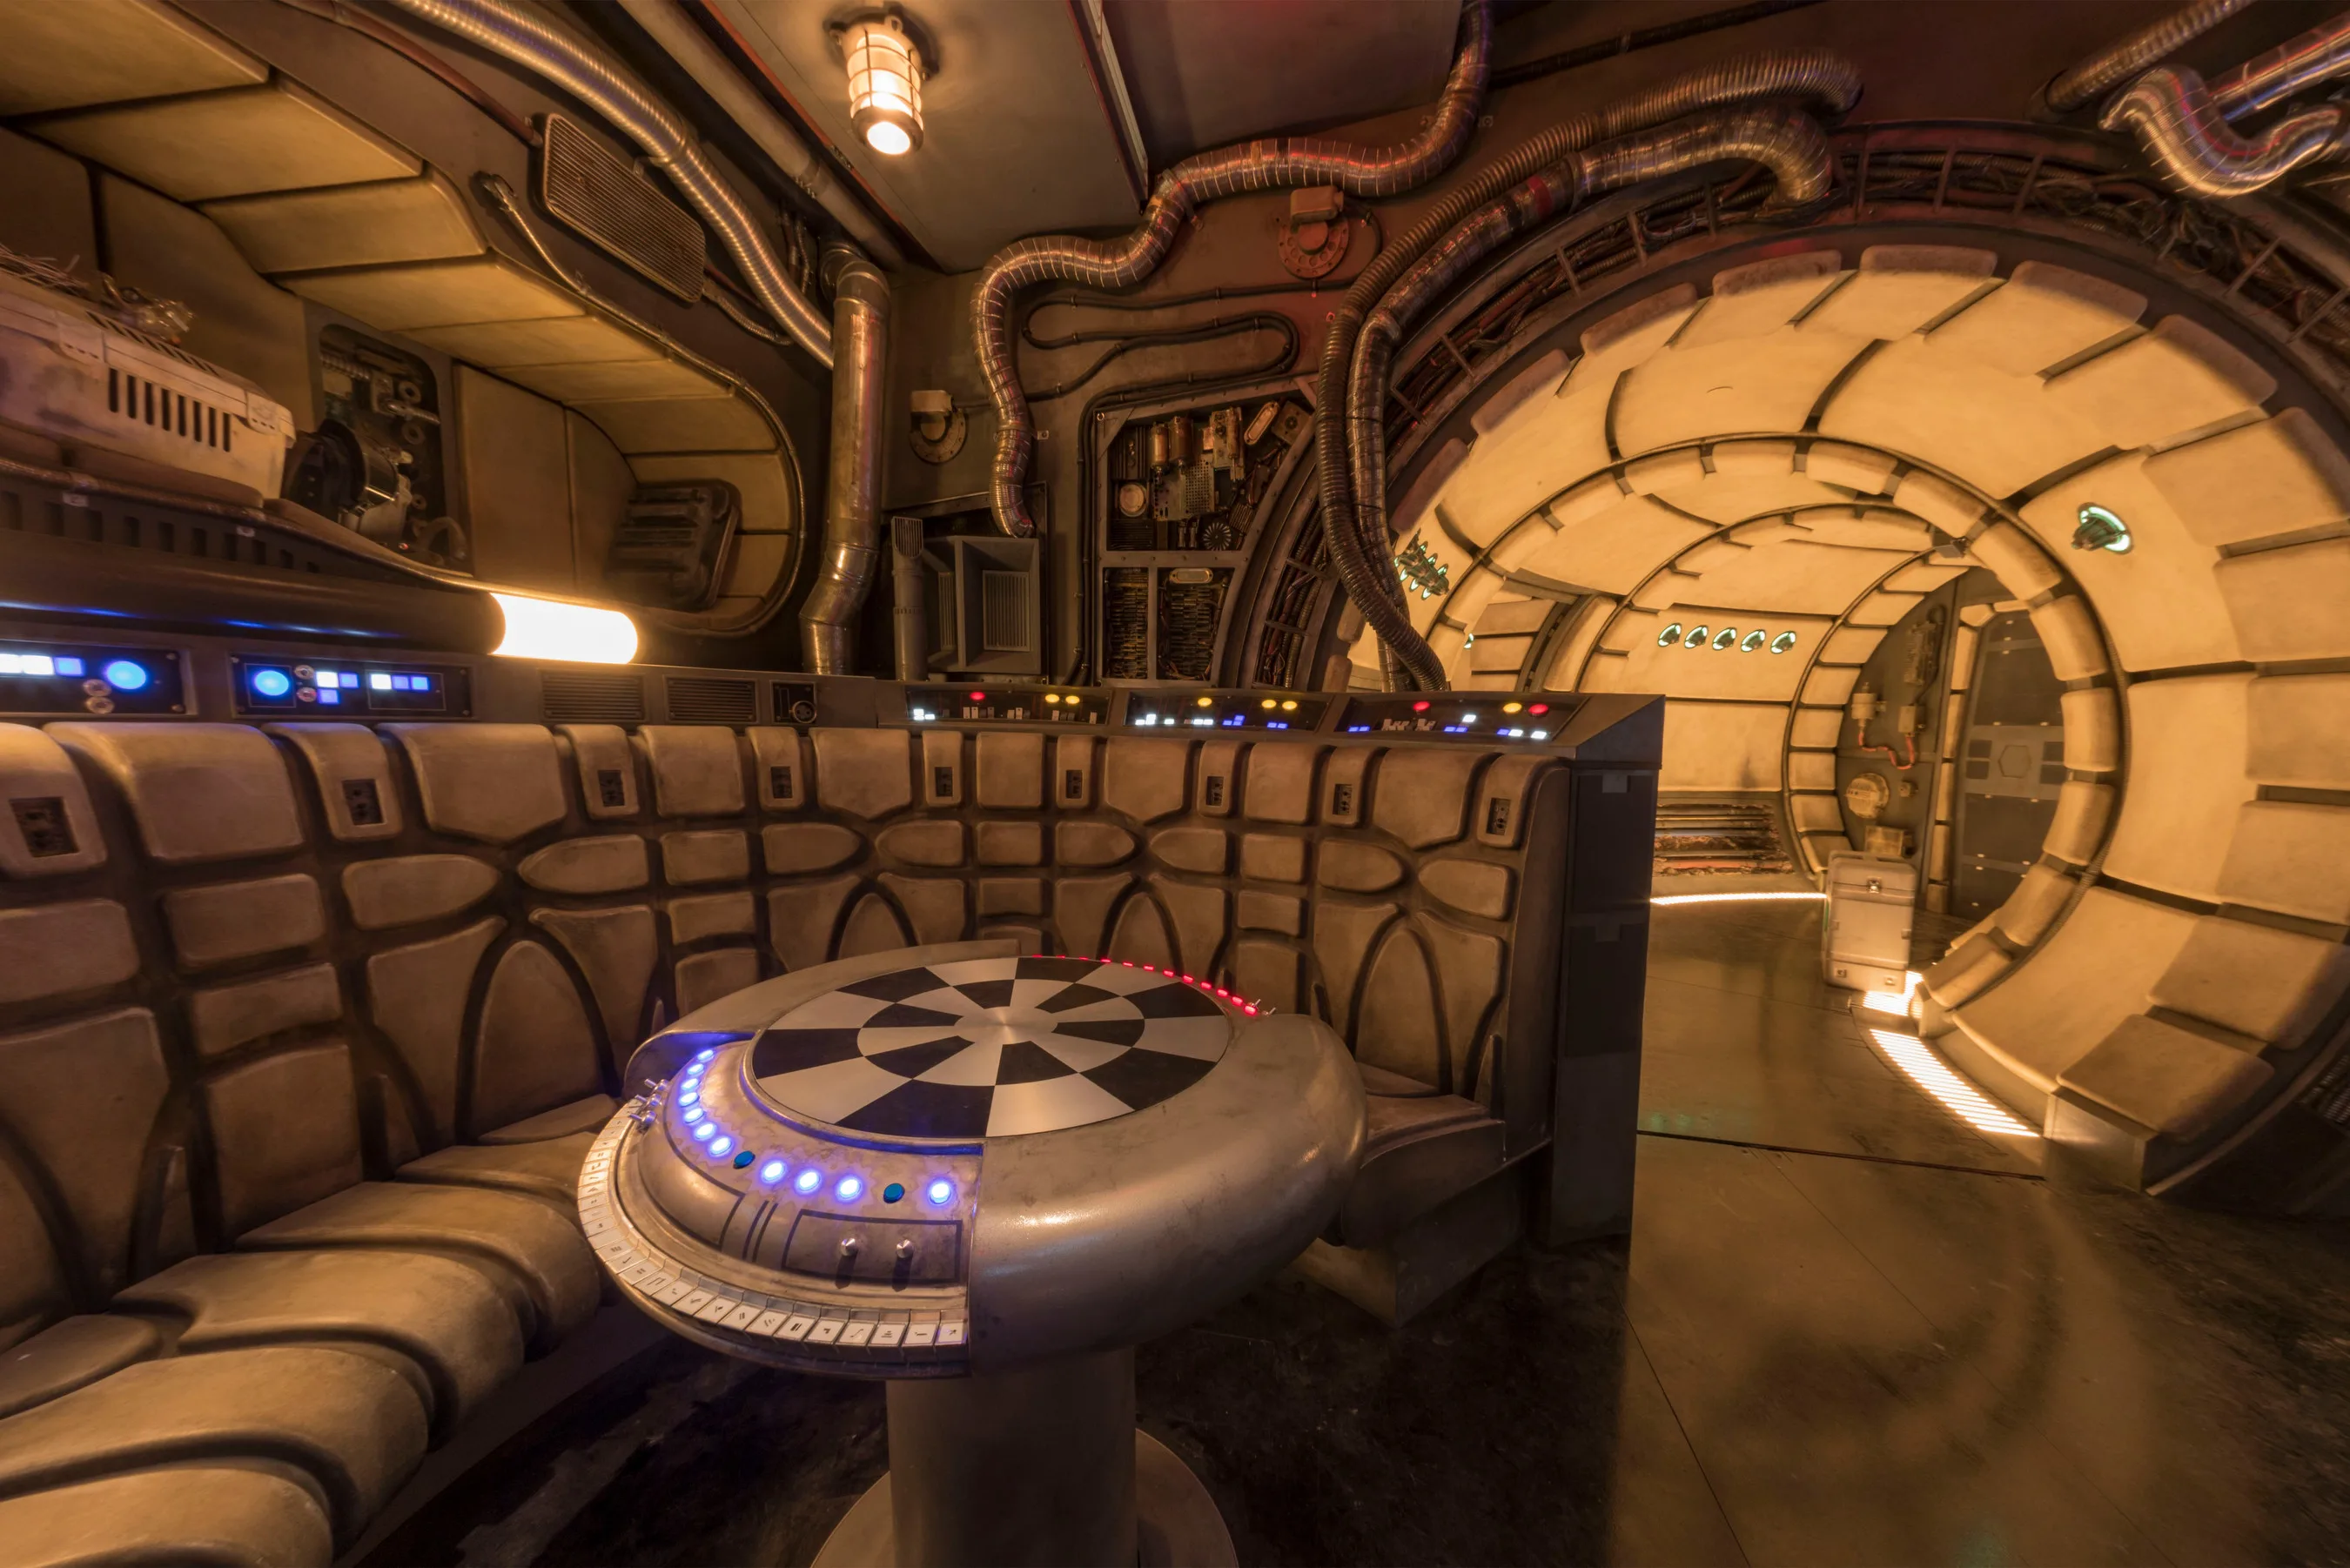 Inside the Millennium Falcon: Smuggler's Run attraction in Galaxy's Edge